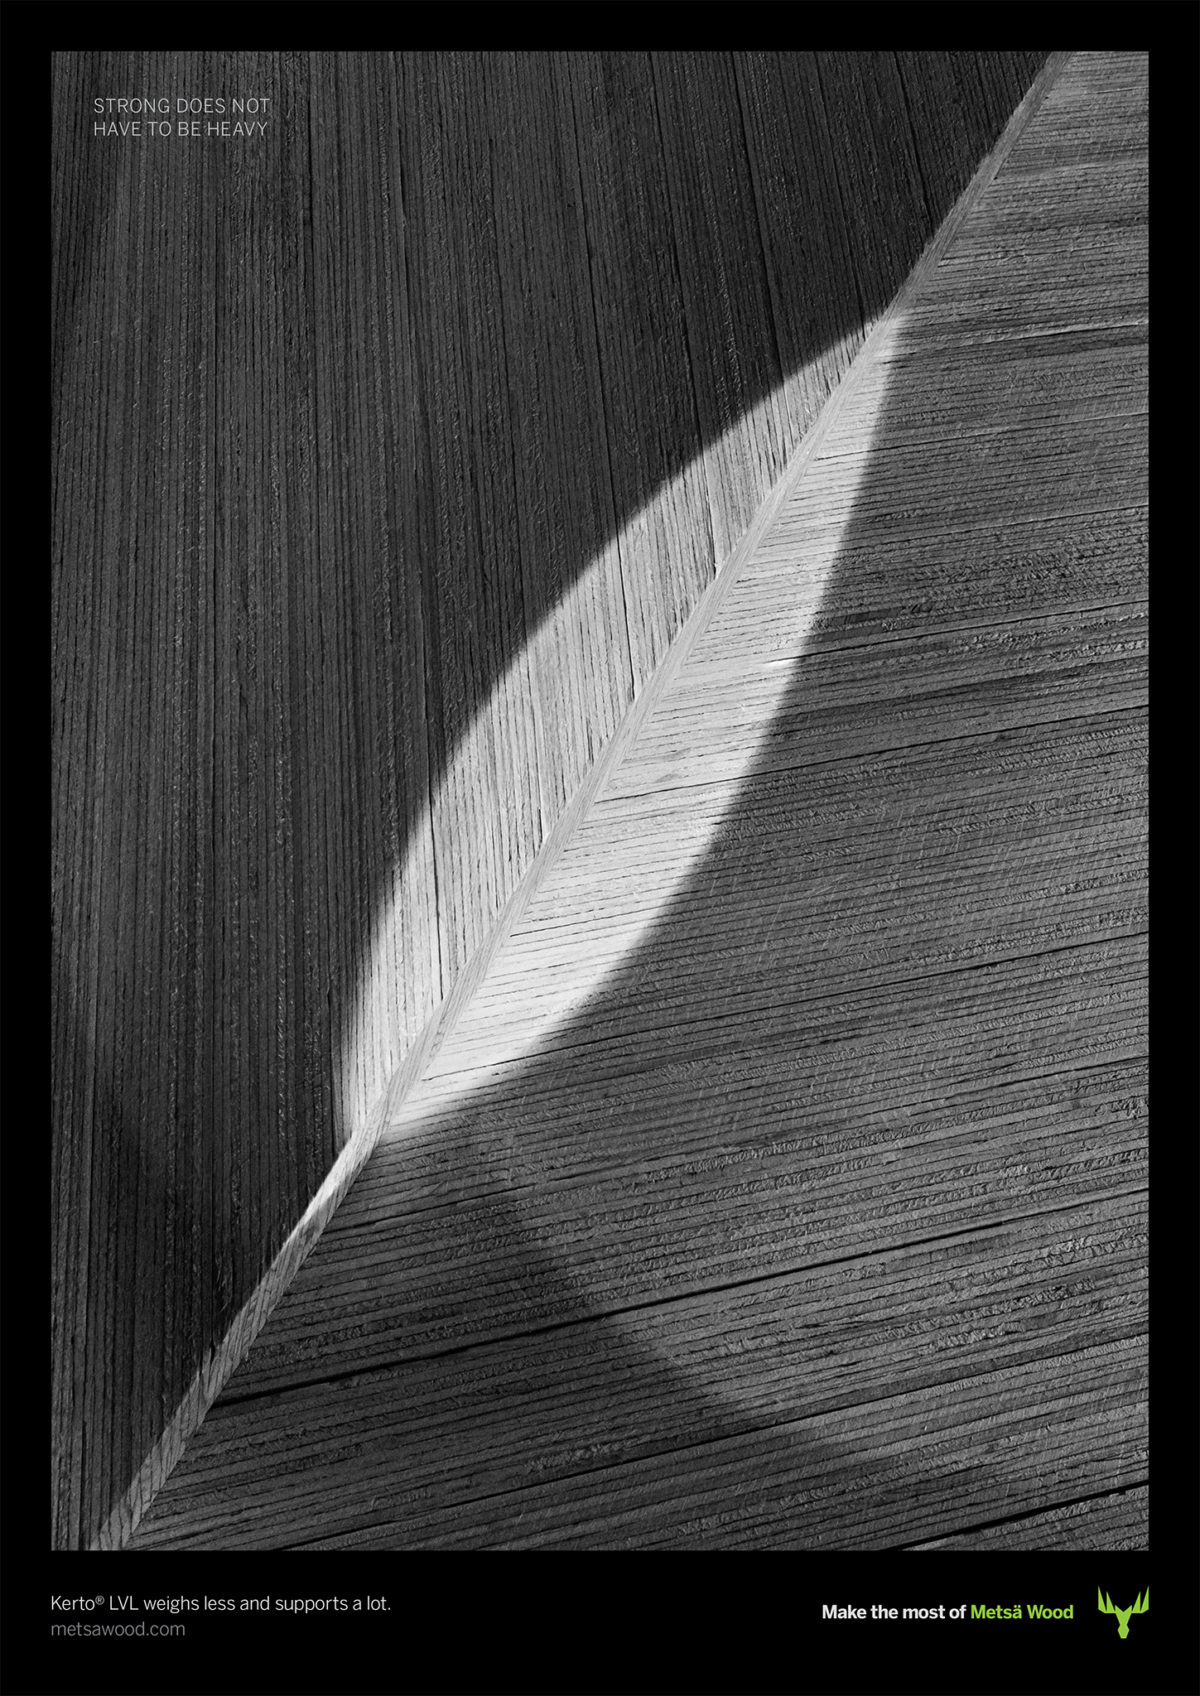 architecture wood stiil life Photography 